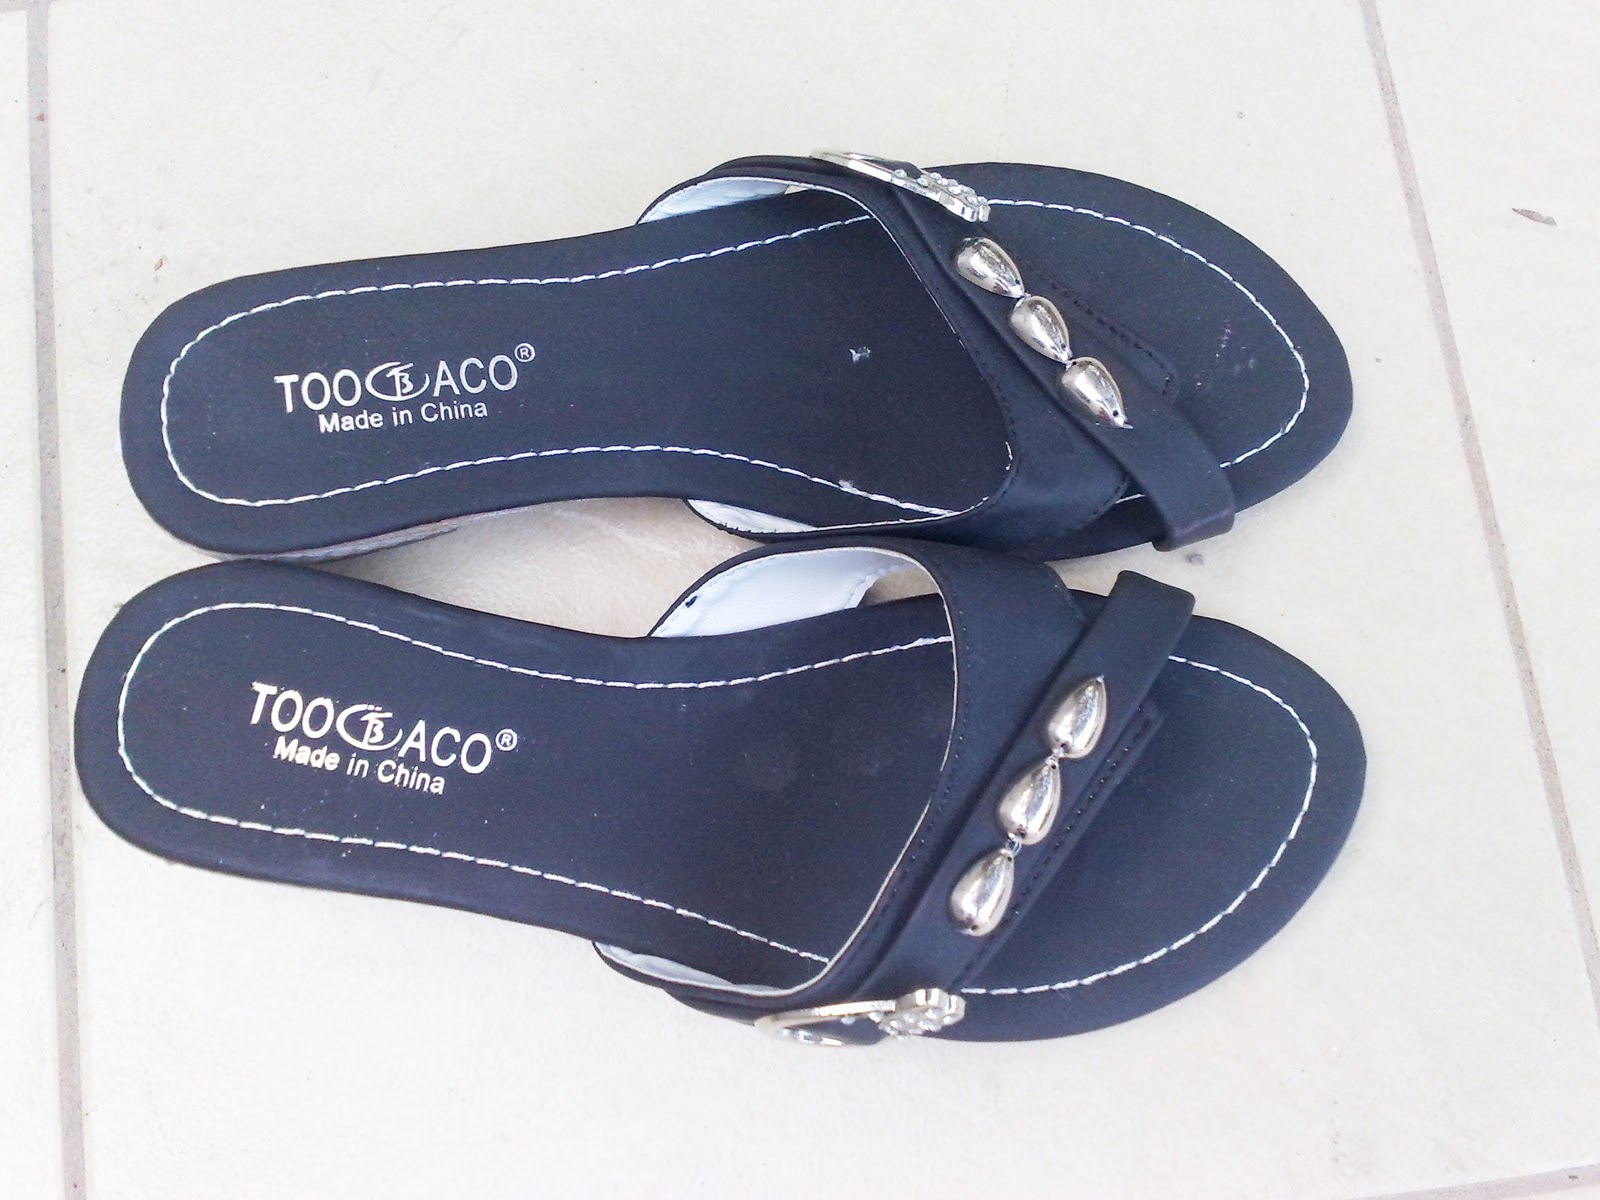 TooBaco flat Foot Shoes ~ Glamorous Girl :: Fashion Inspiration